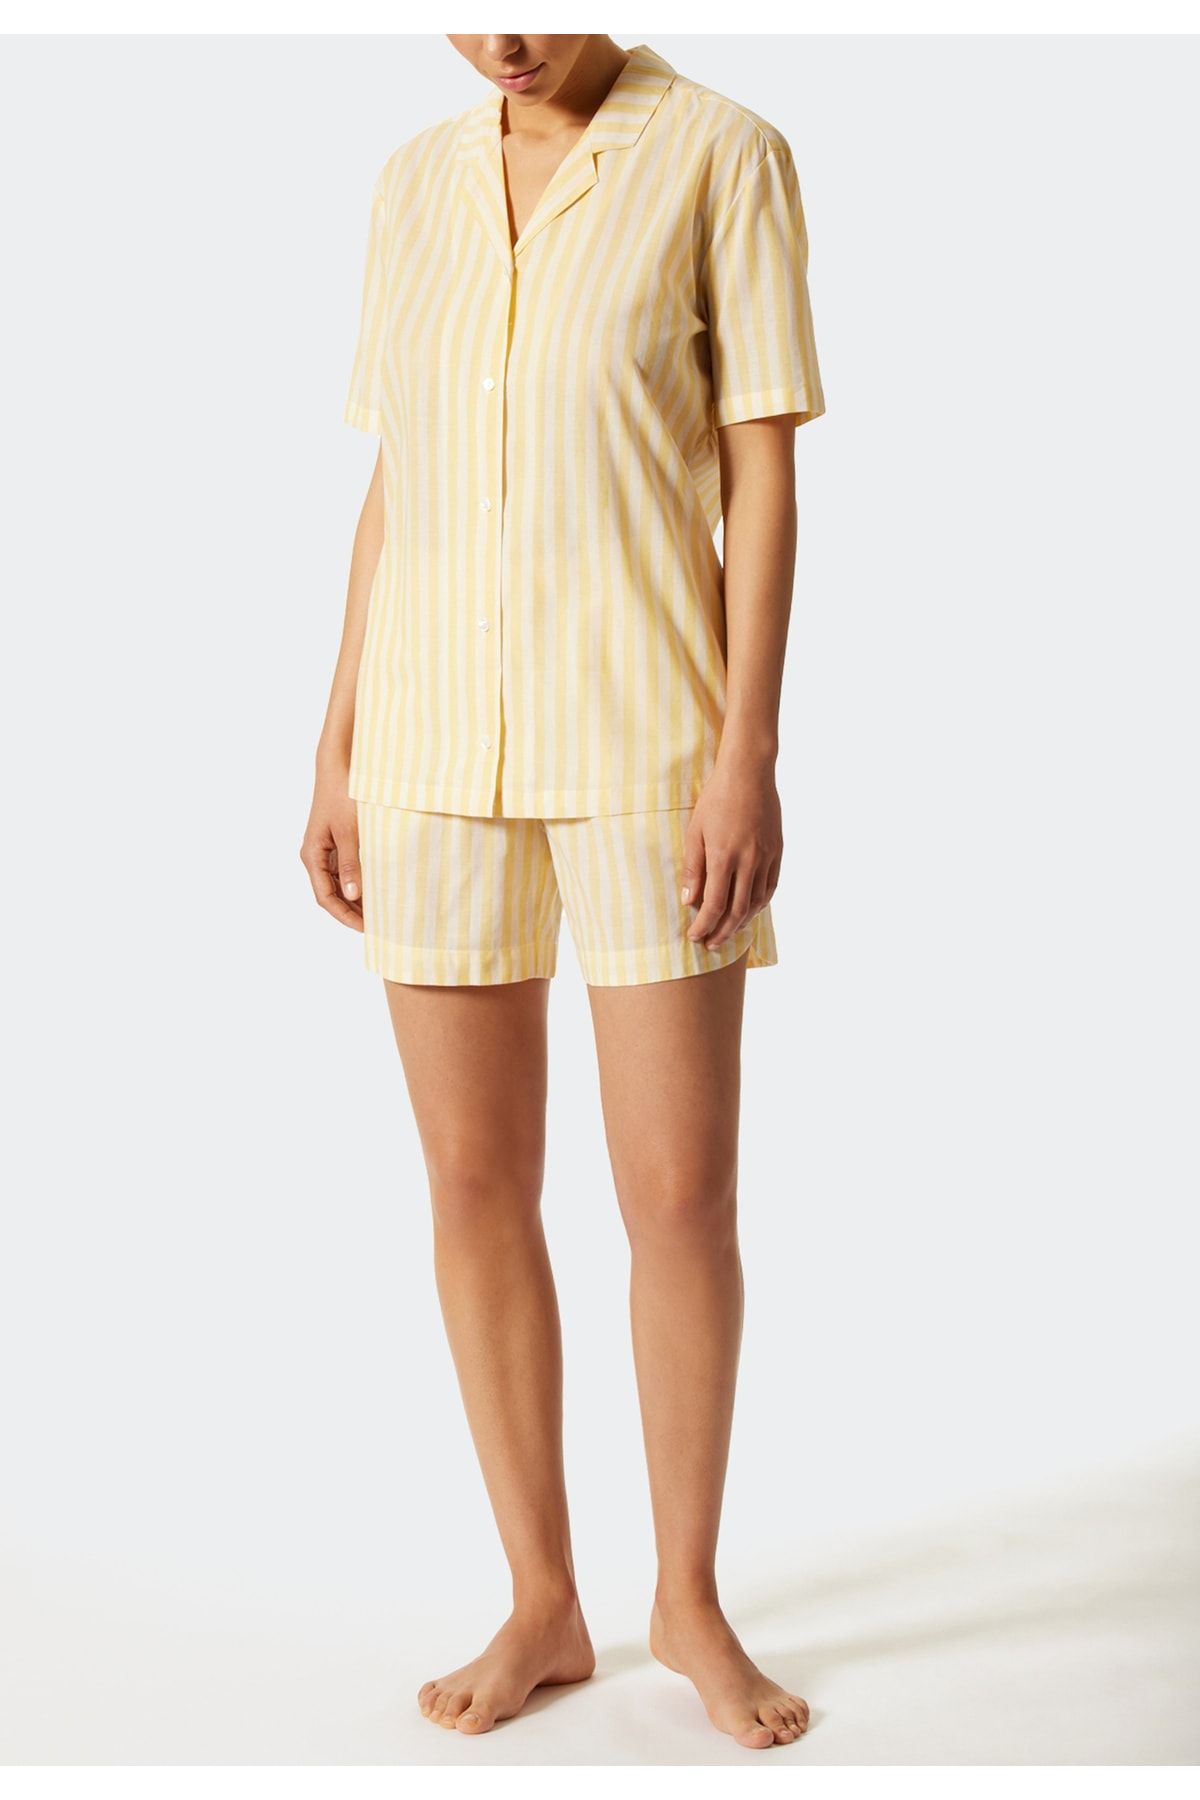 Schiesser Pyjama Gestreift - - - Gelb set Trendyol